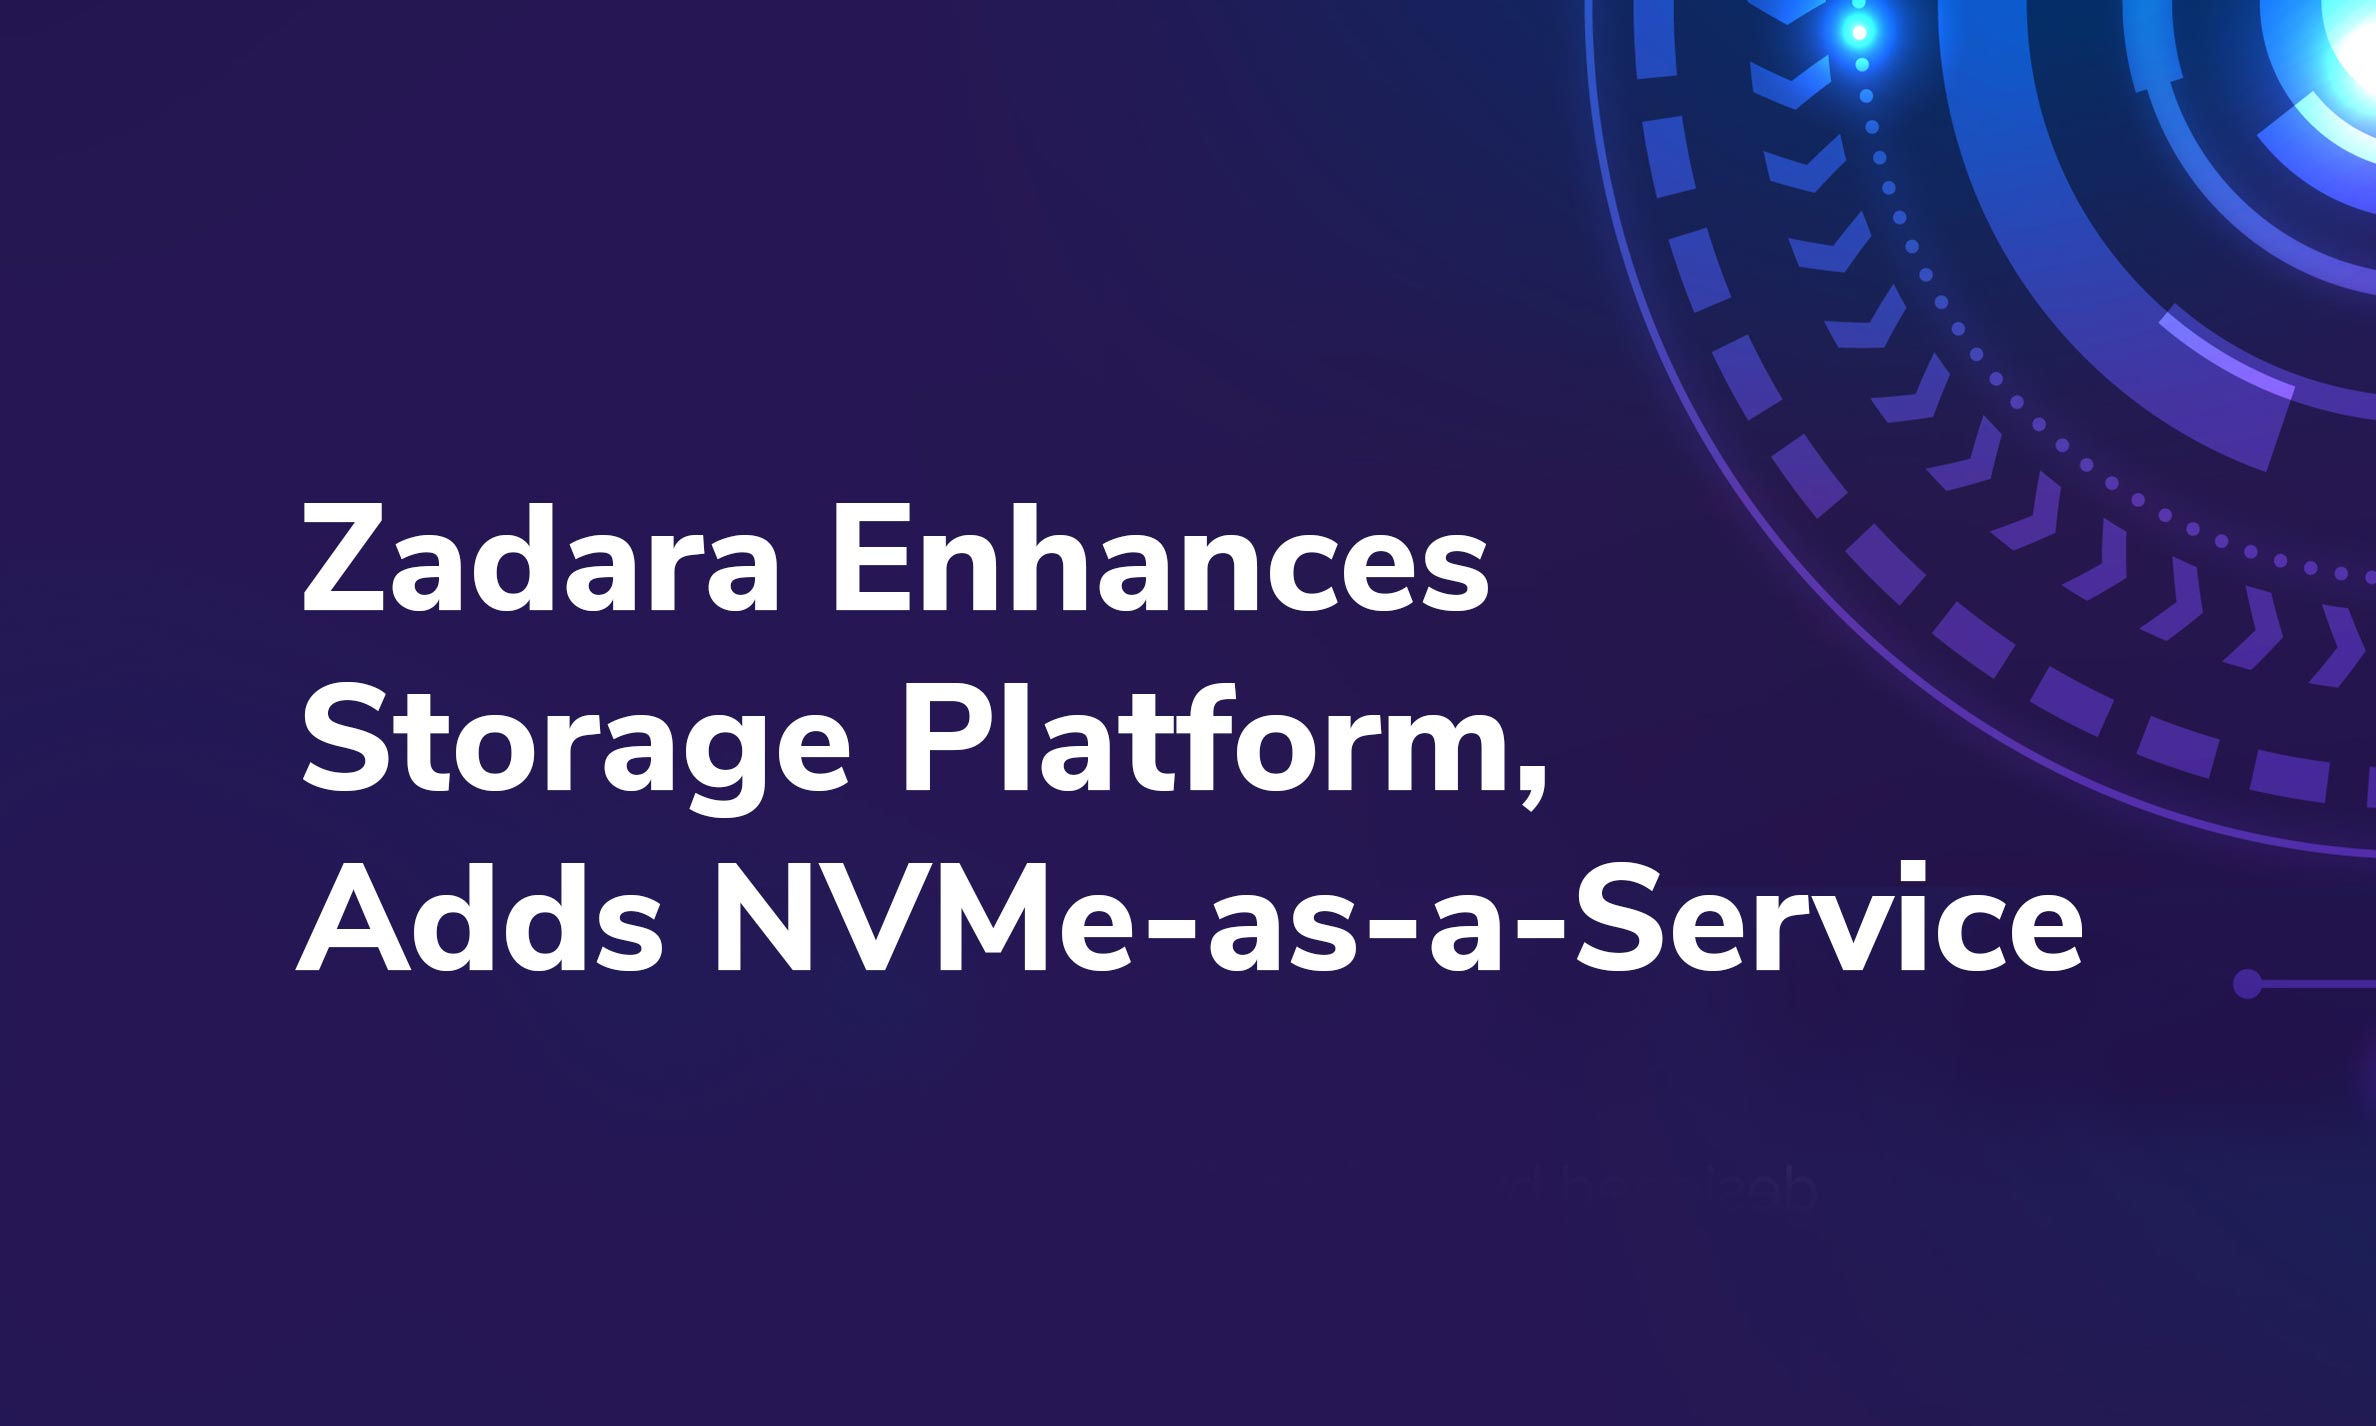 Zadara Enhances Storage Platform, Adds NVMe-as-a-Service